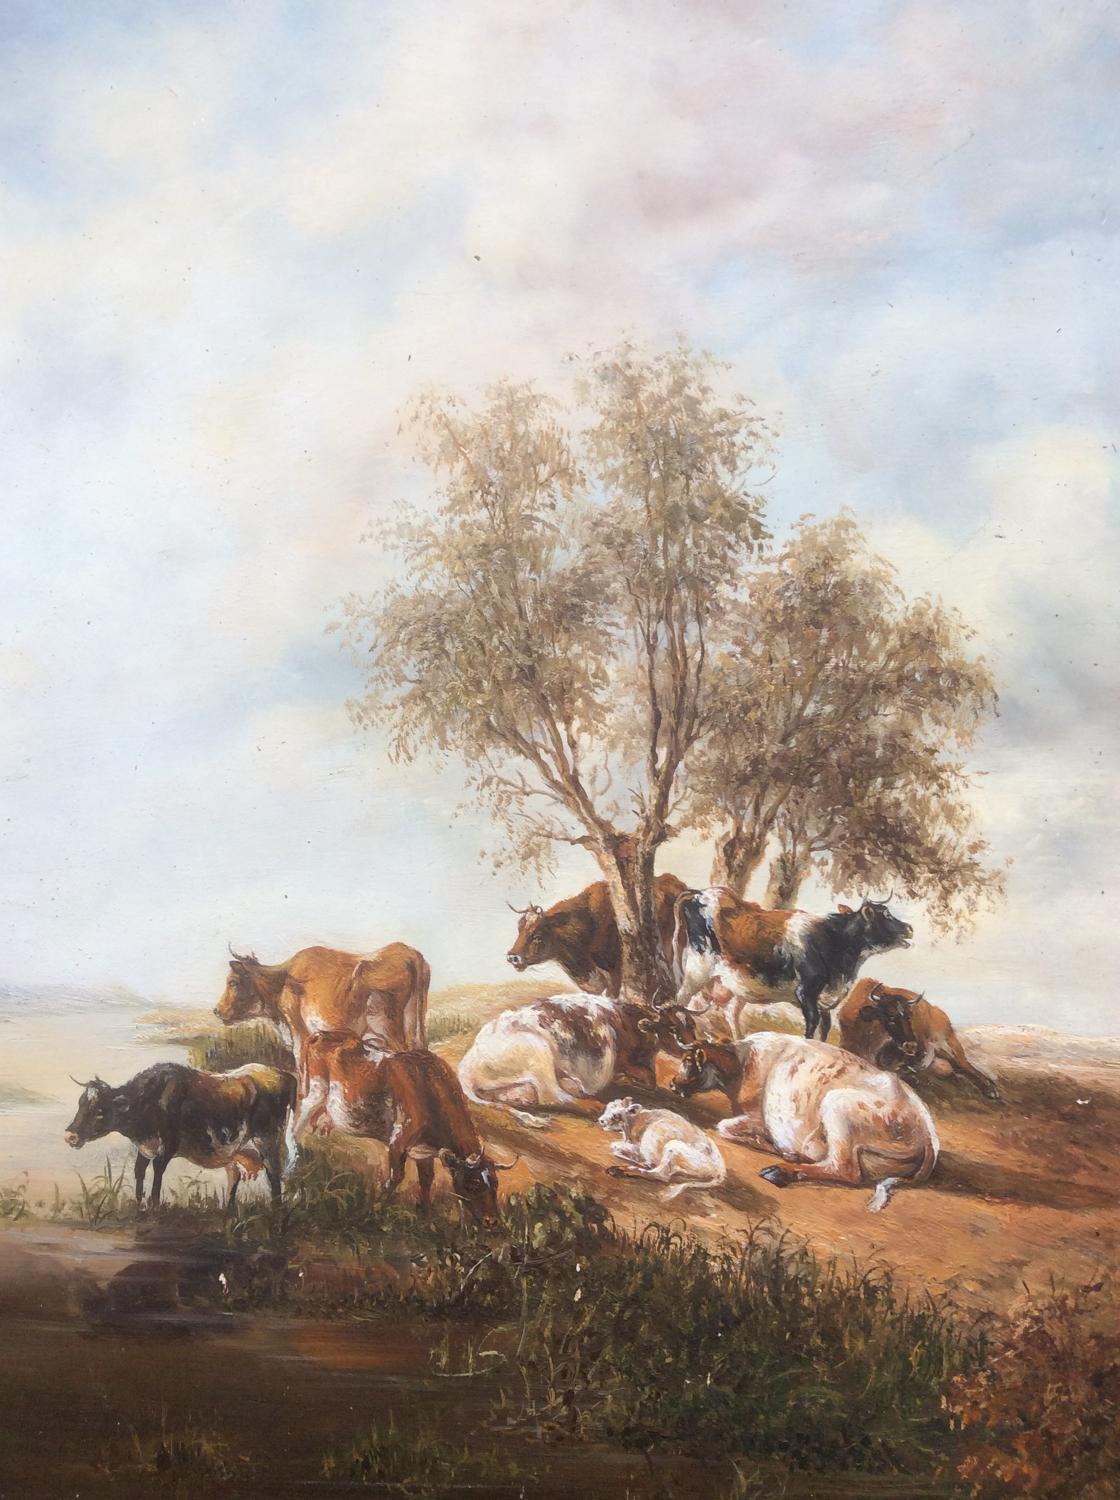 19th century English school pastoral scene